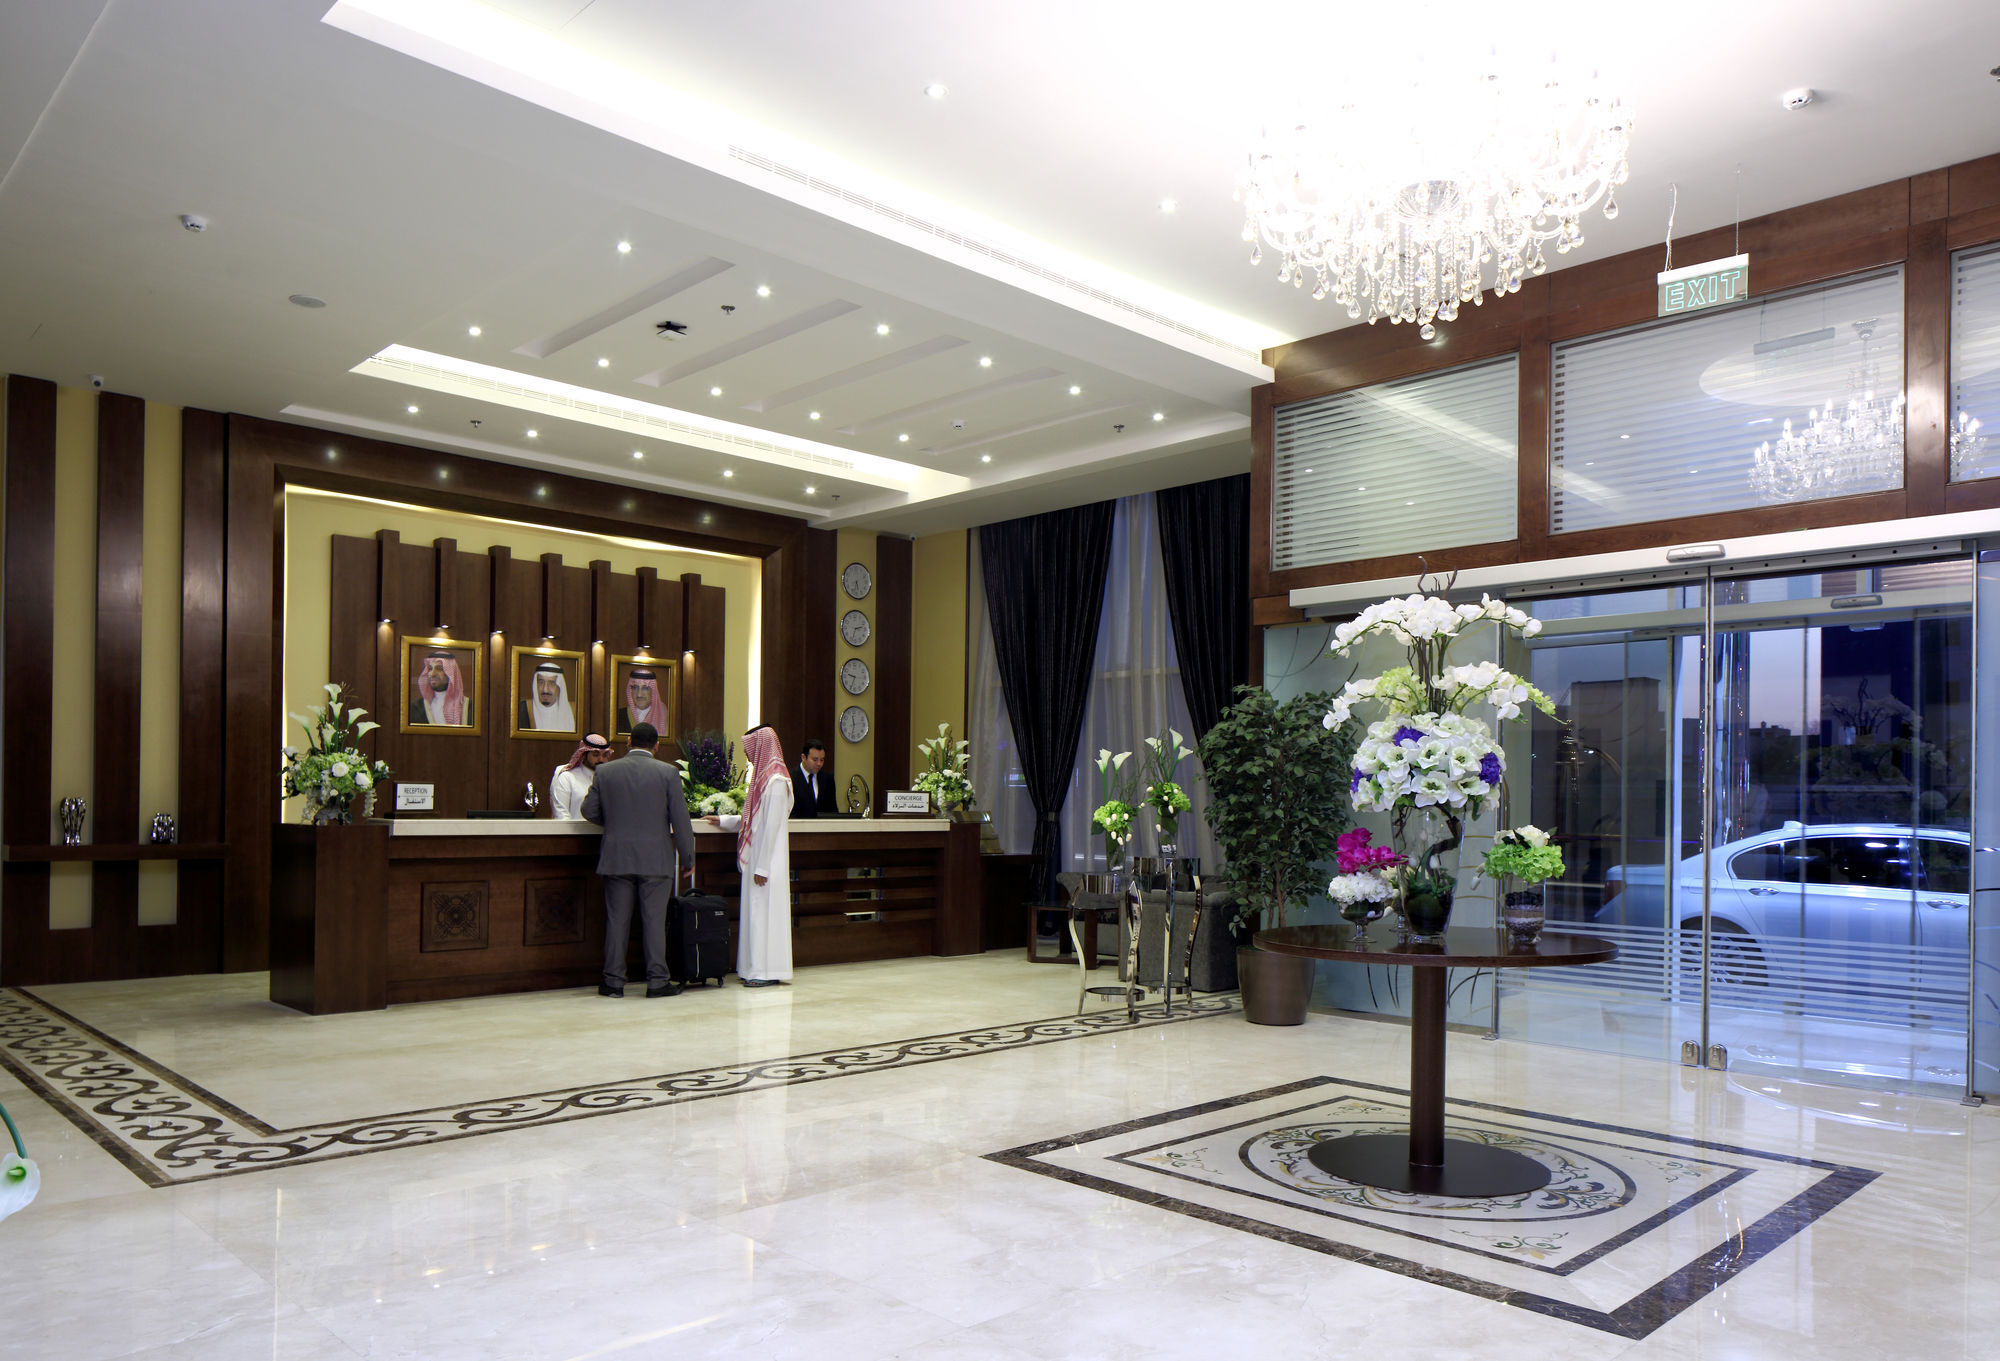 Swiss International Royal Hotel Riyadh Exterior photo